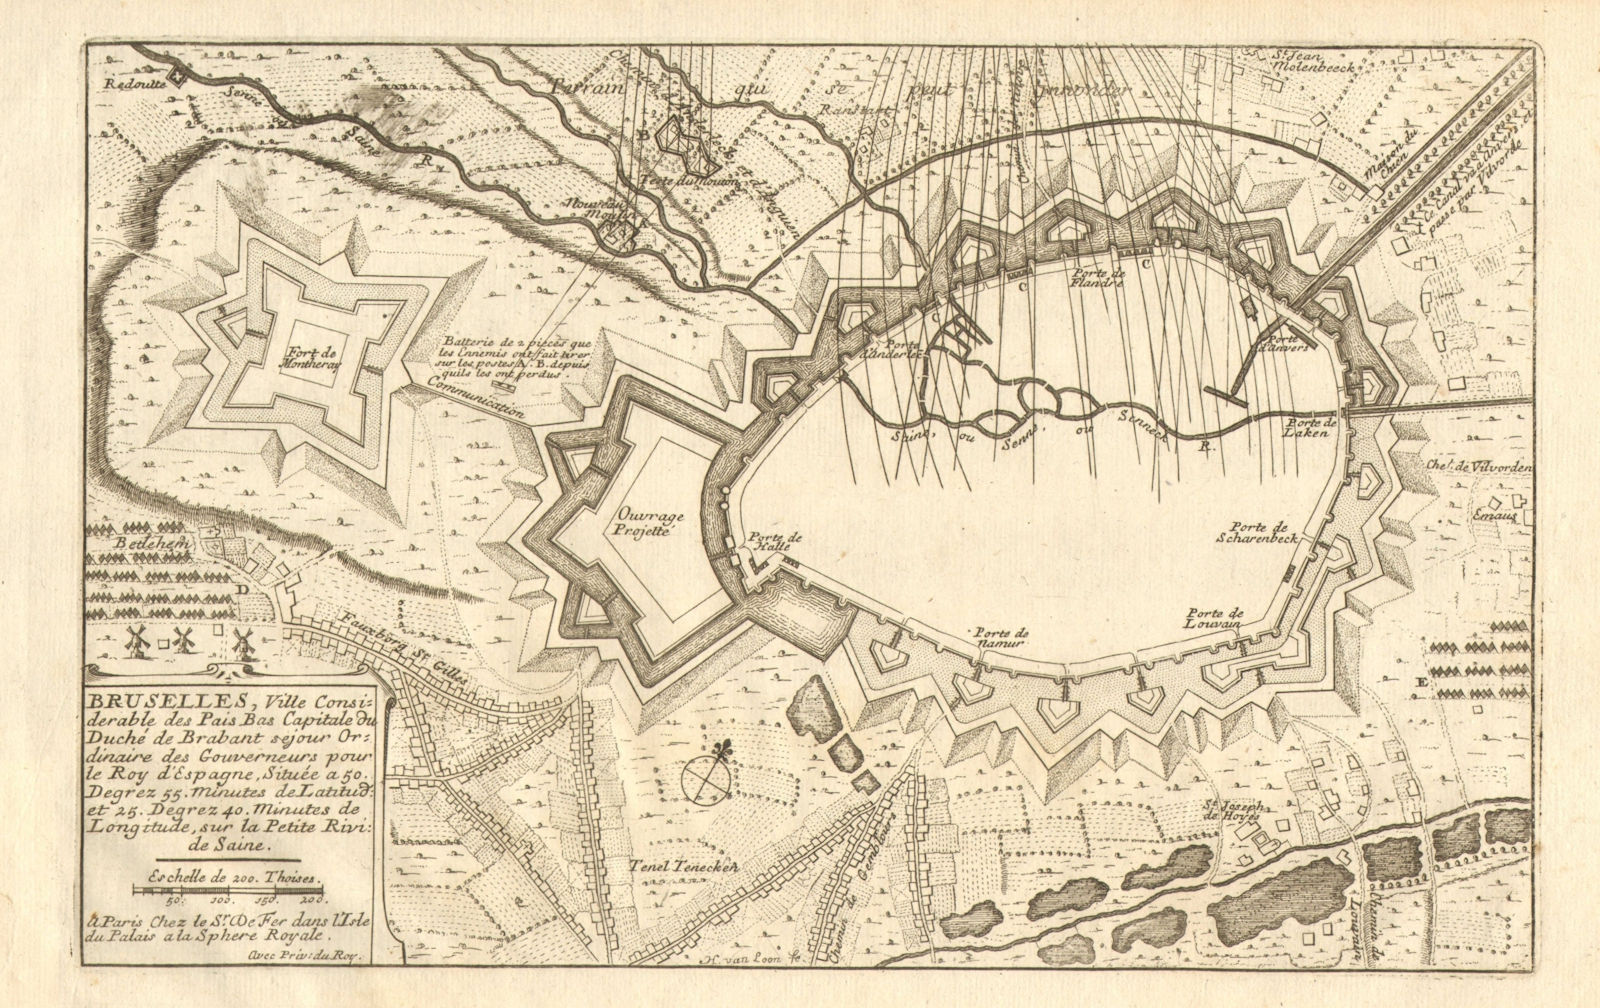 Associate Product 'Bruselles'. Brussels Bruxelles. Fortified town/city plan. DE FER 1705 old map